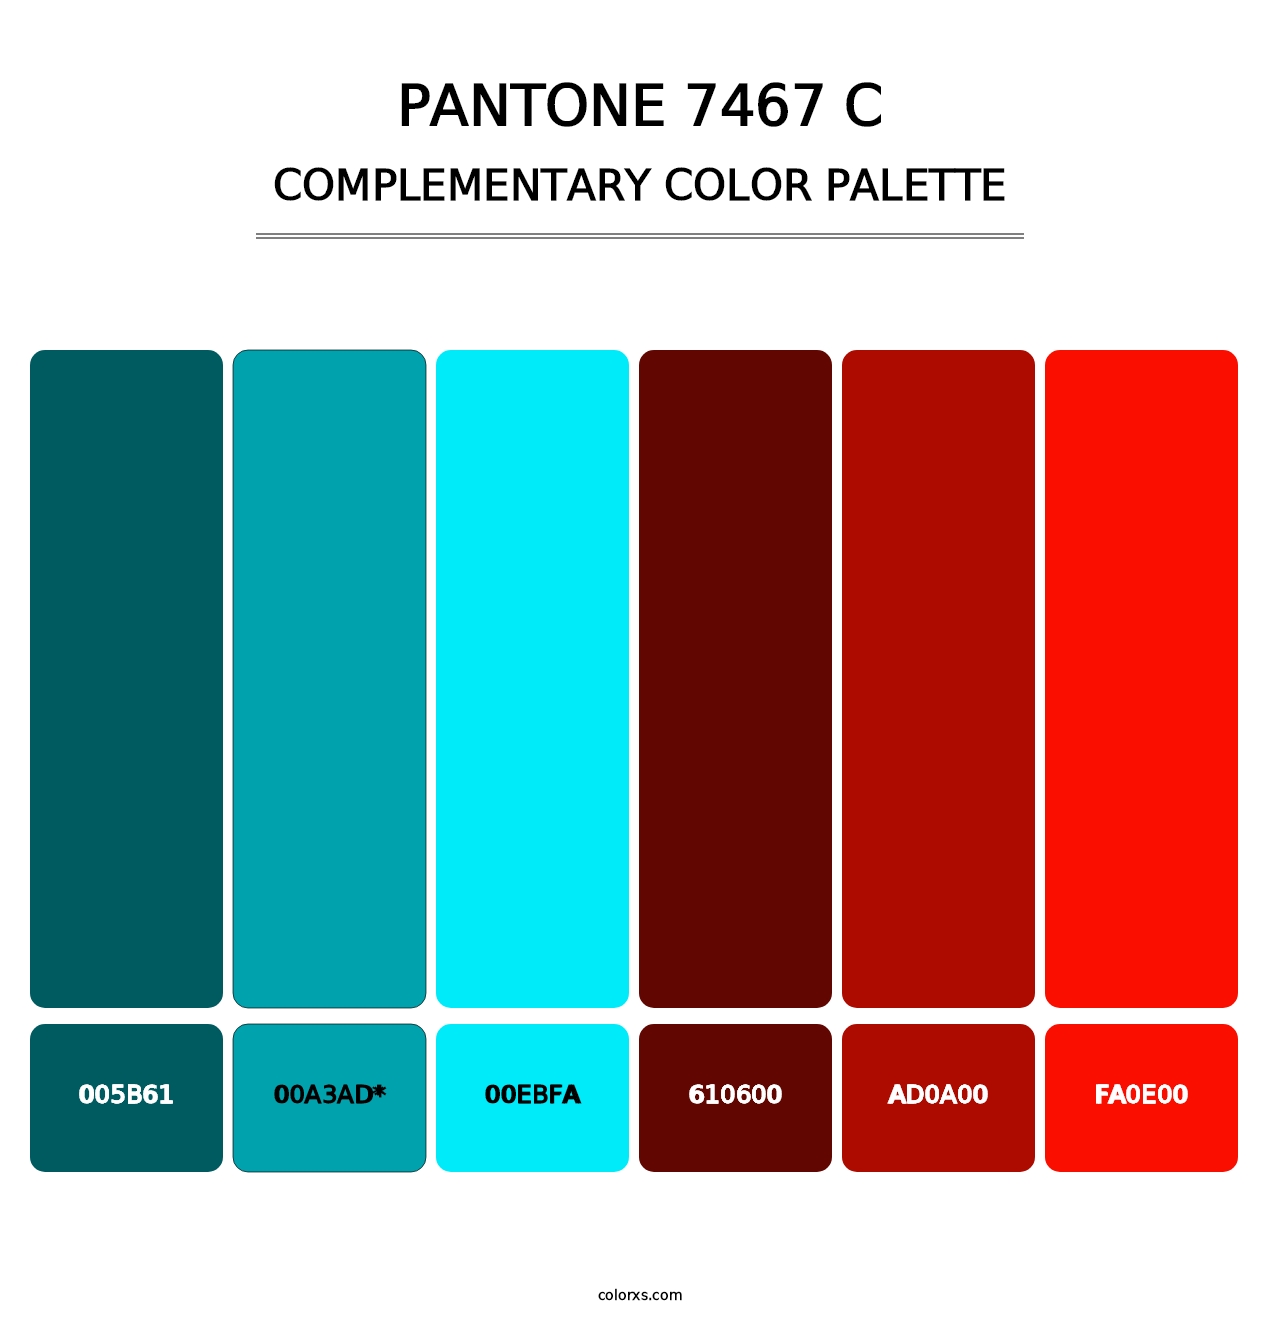 PANTONE 7467 C - Complementary Color Palette